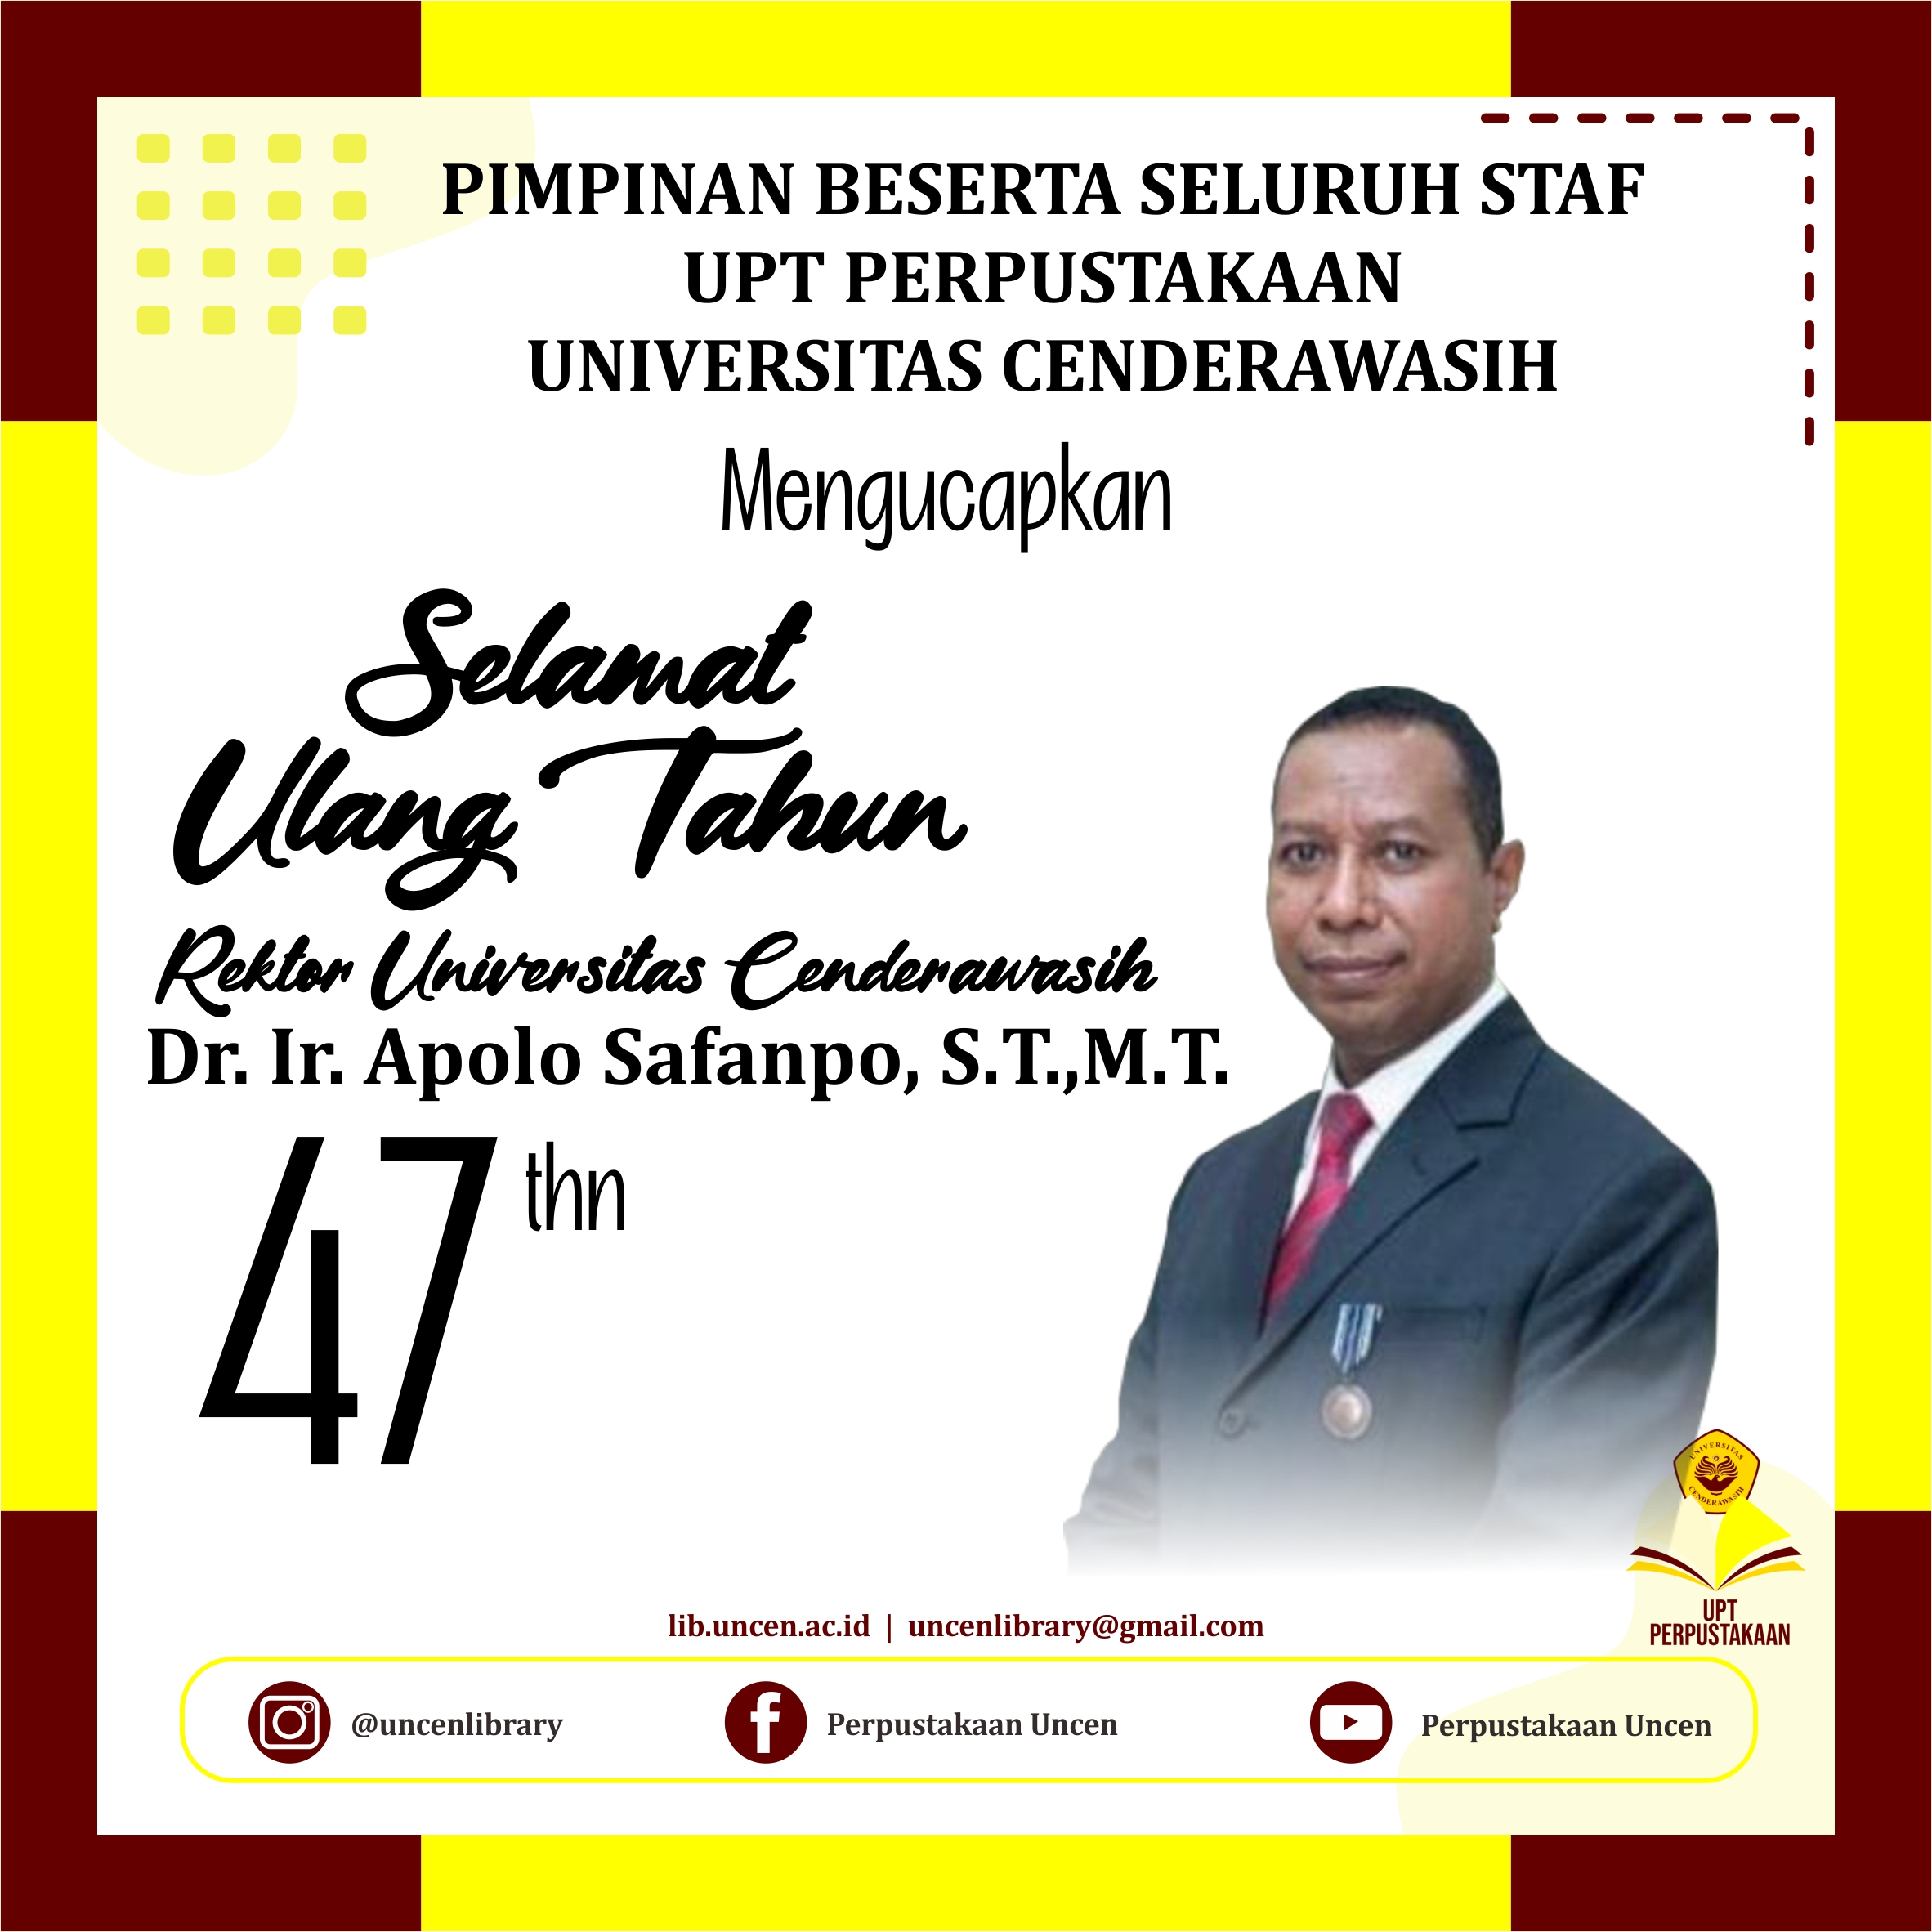 You are currently viewing Ulang Tahun Rektor Universitas Cenderawasih